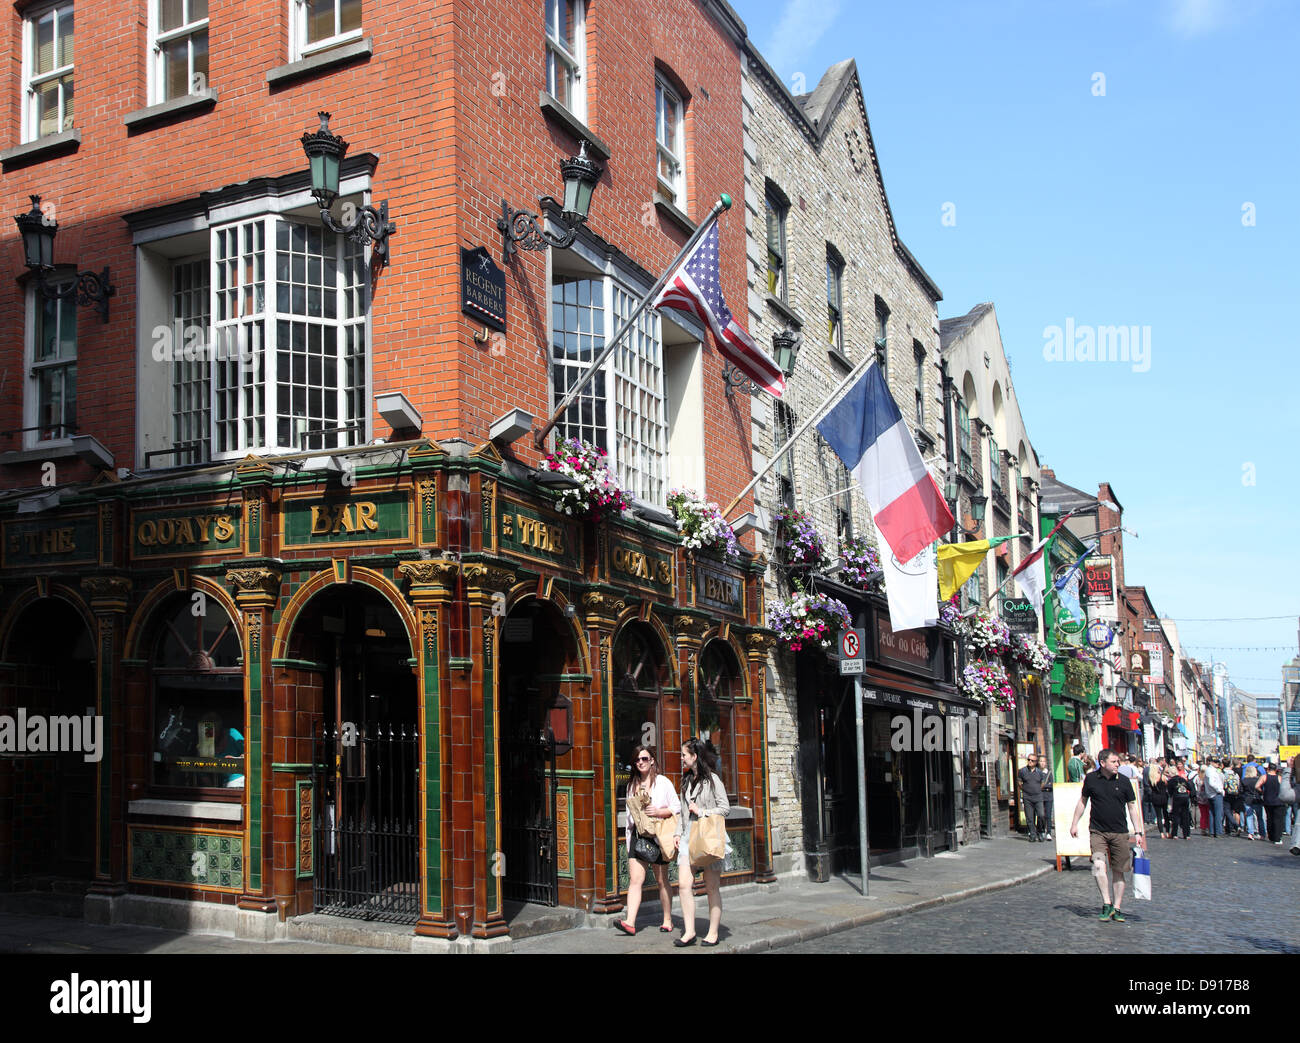 Quays Bar, summer day in Temple Bar, Dublin's Left Bank quarter, Ireland Stock Photo